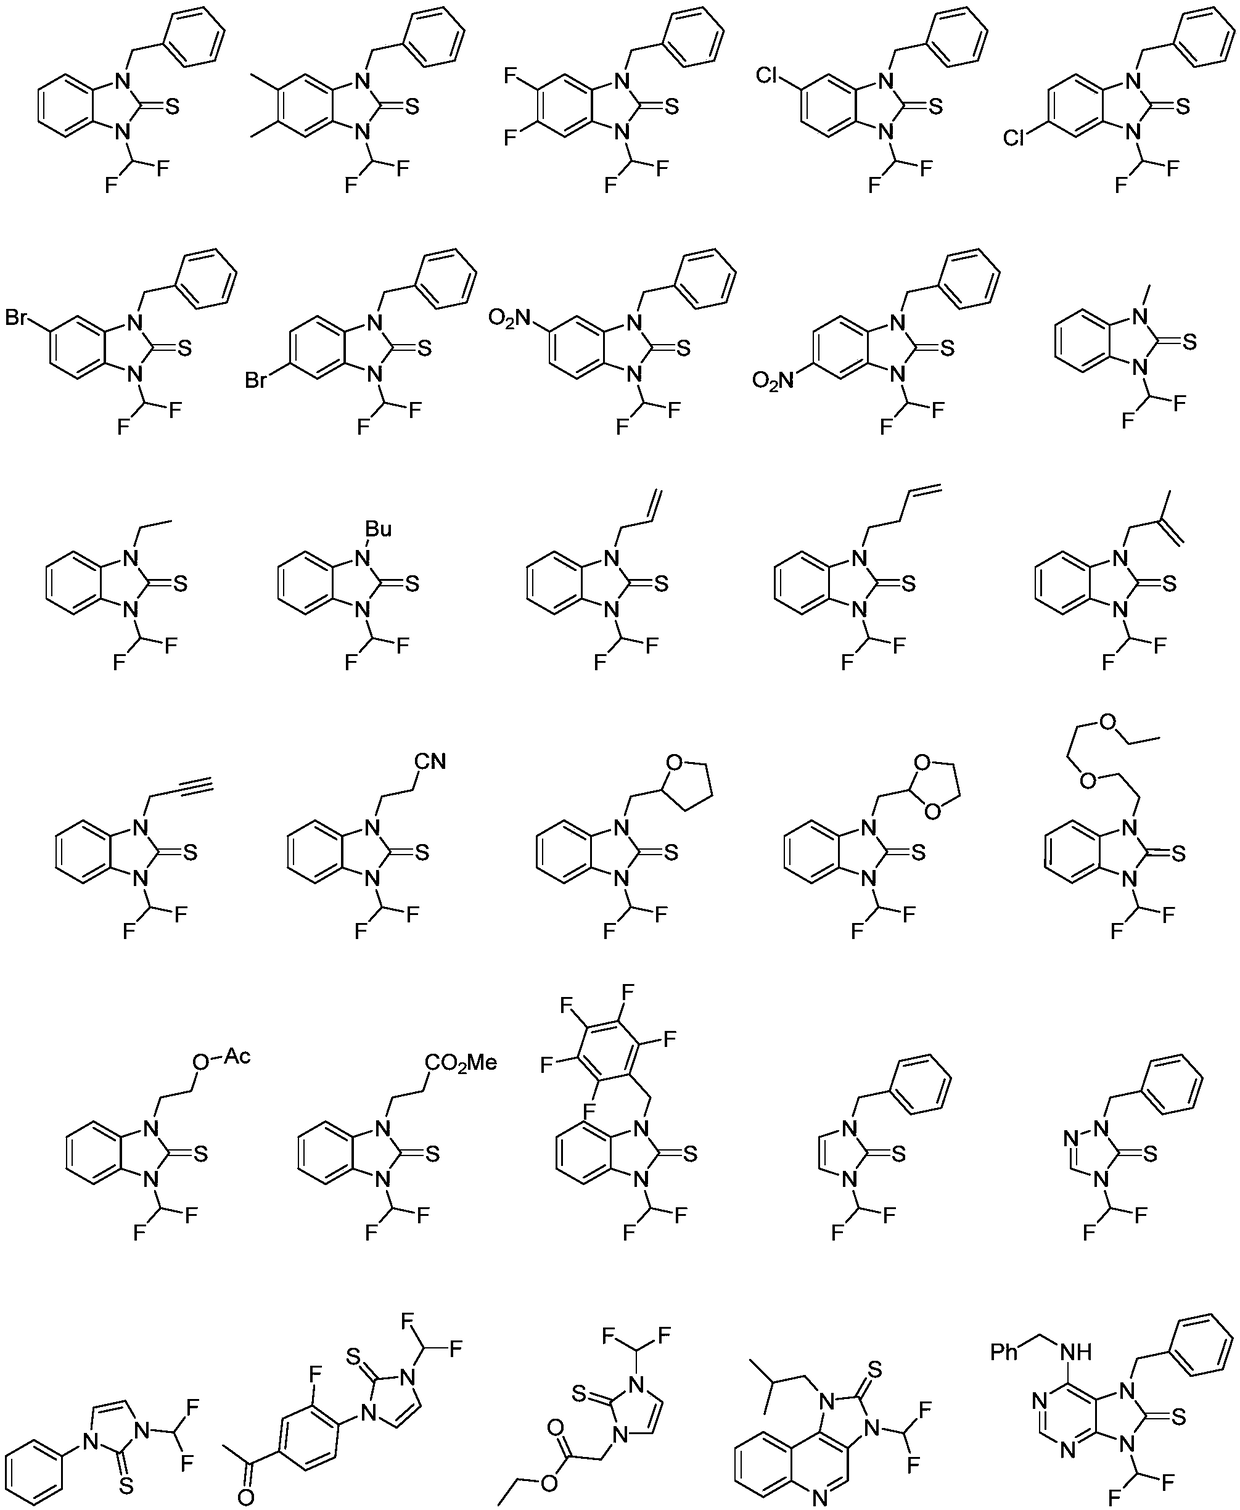 N-difluoromethylazole sulfur (selenium) urea derivative and preparation method thereof